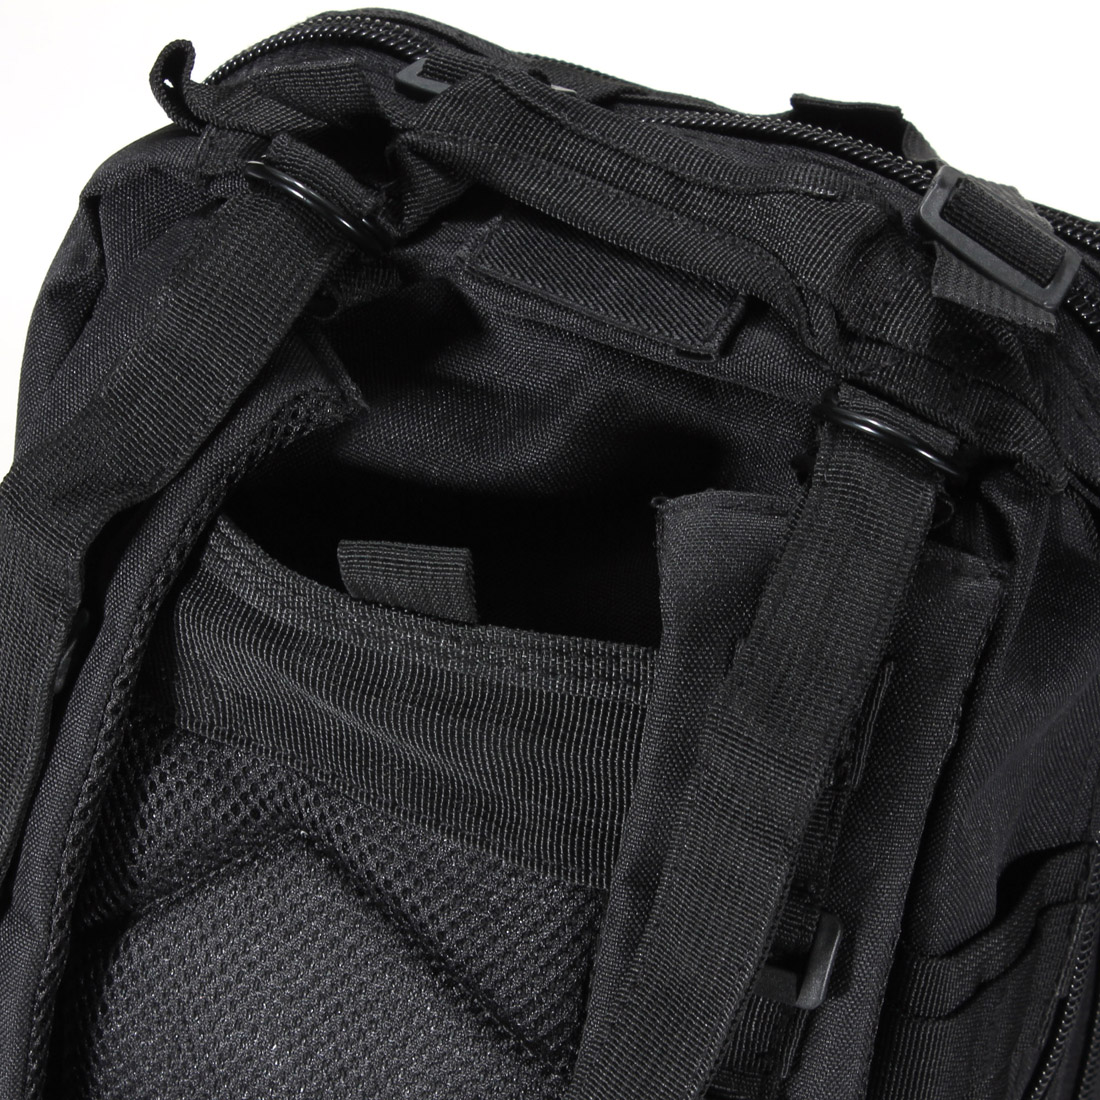 IPRee® 30L Outdoor Tactical Backpack 600D Nylon Camouflage Trekking ...